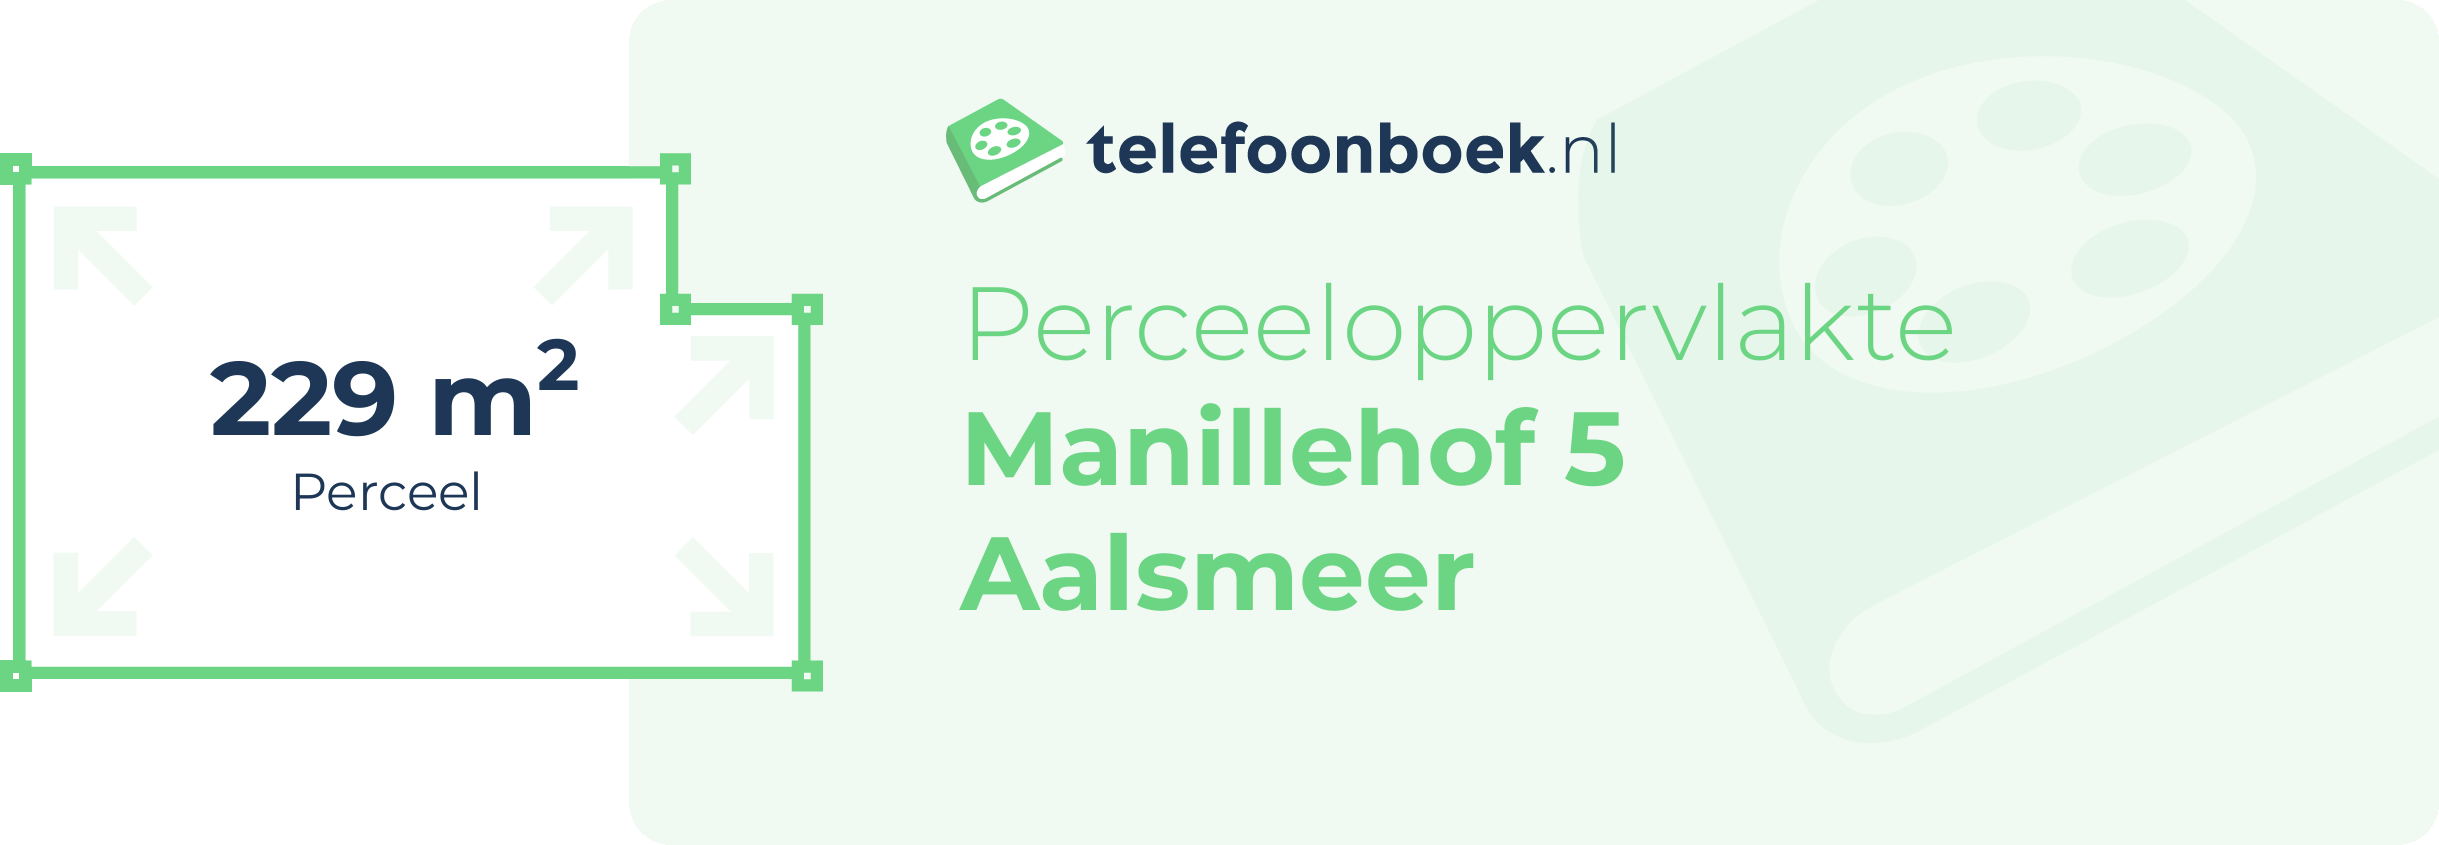 Perceeloppervlakte Manillehof 5 Aalsmeer